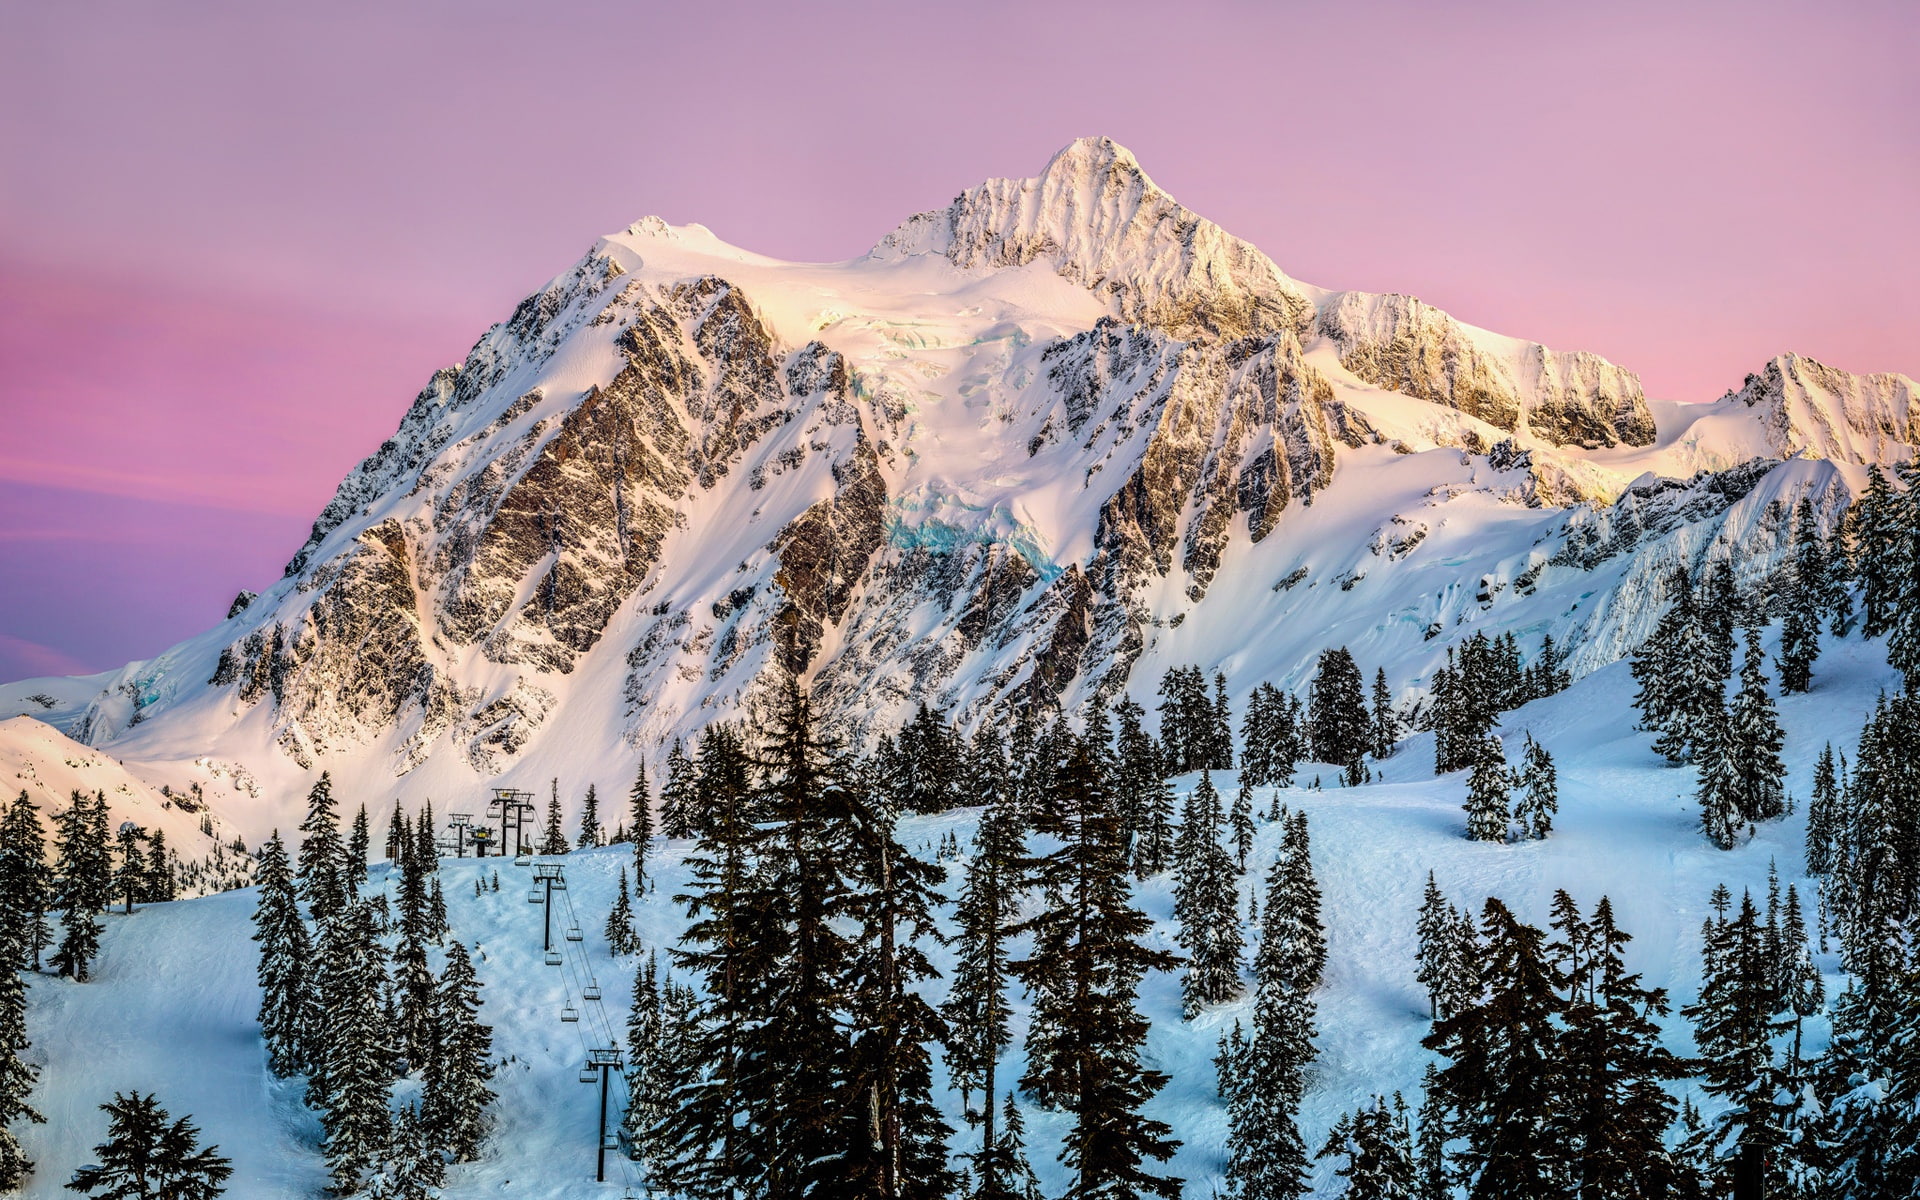 North America, Washington, Mount Shuksan, snow, winter, trees, dusk